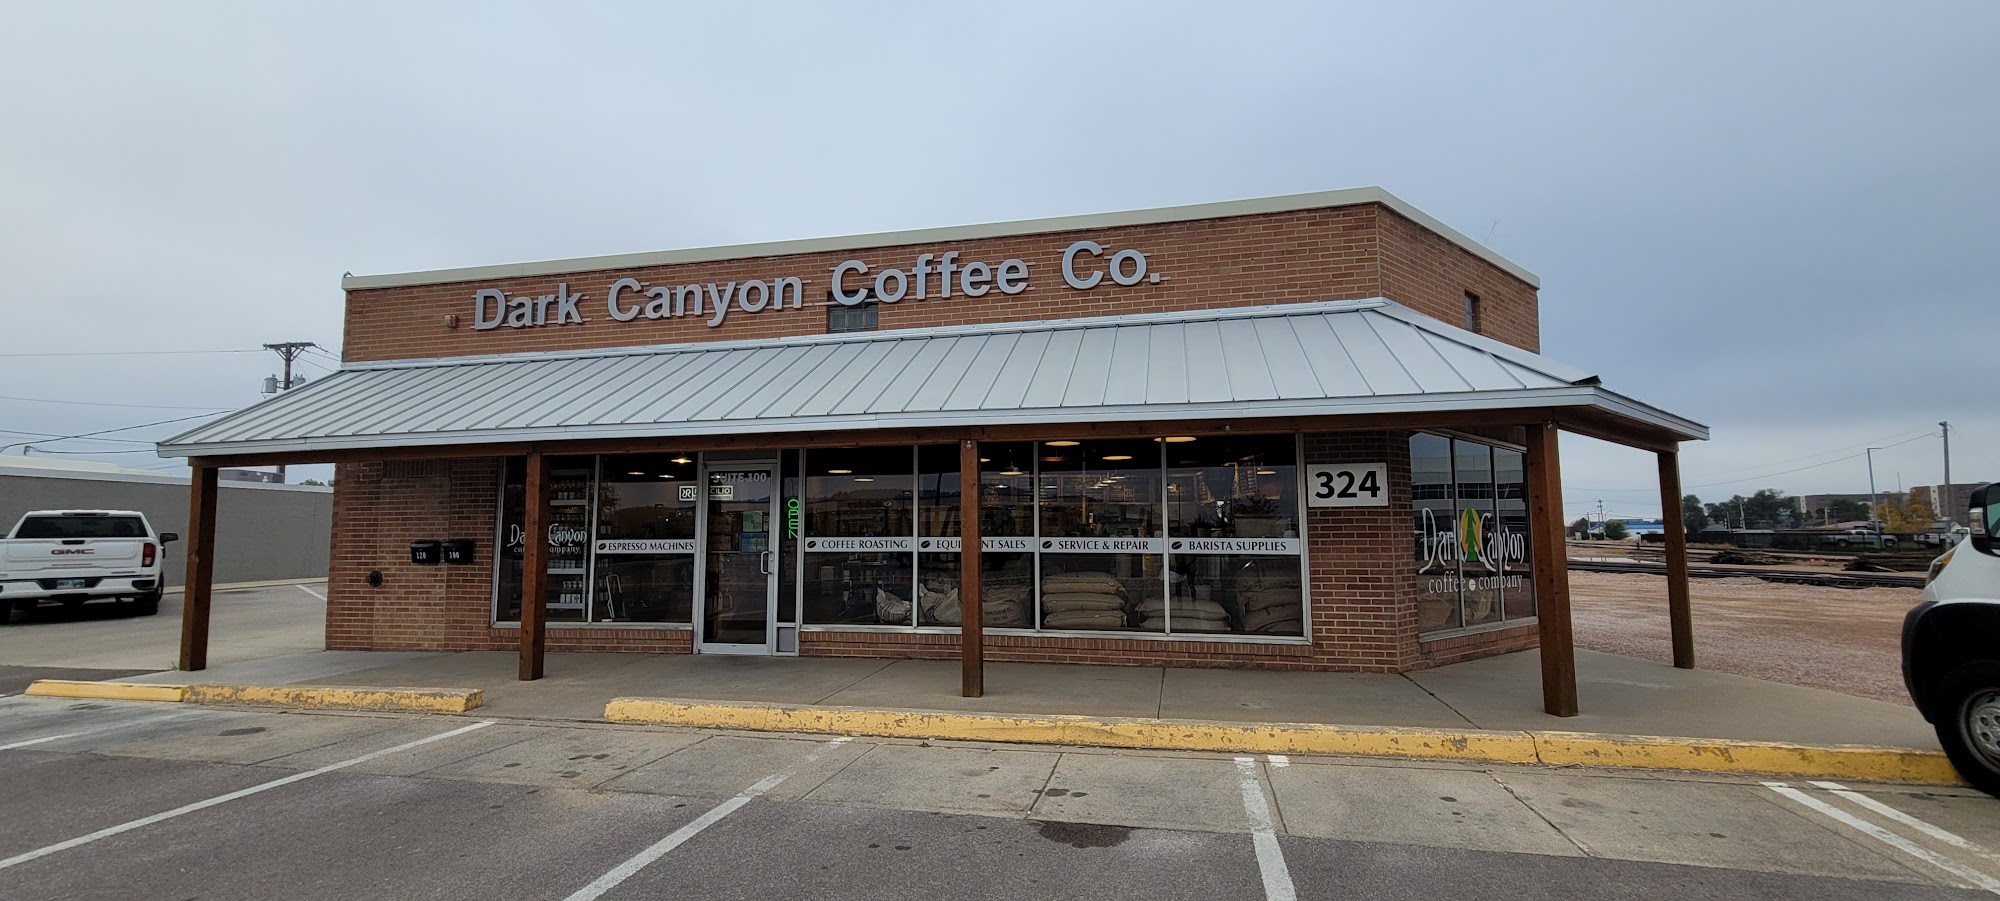 Dark Canyon Coffee Co